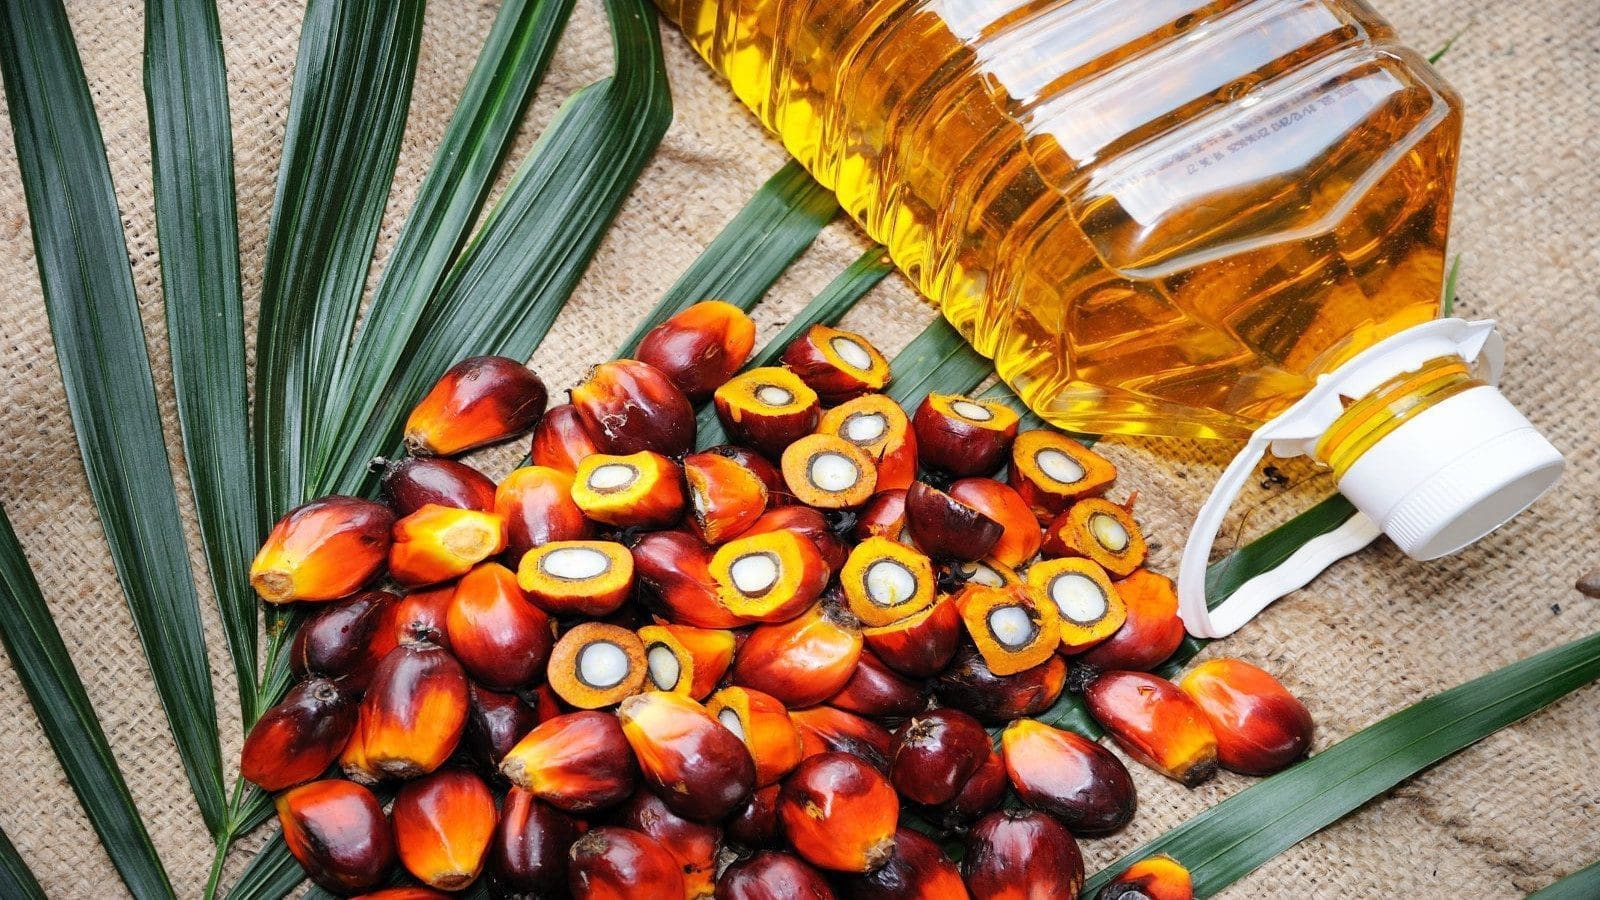 FDA raises alarm over Palm Oil adulteration as it launches anti-fraud app